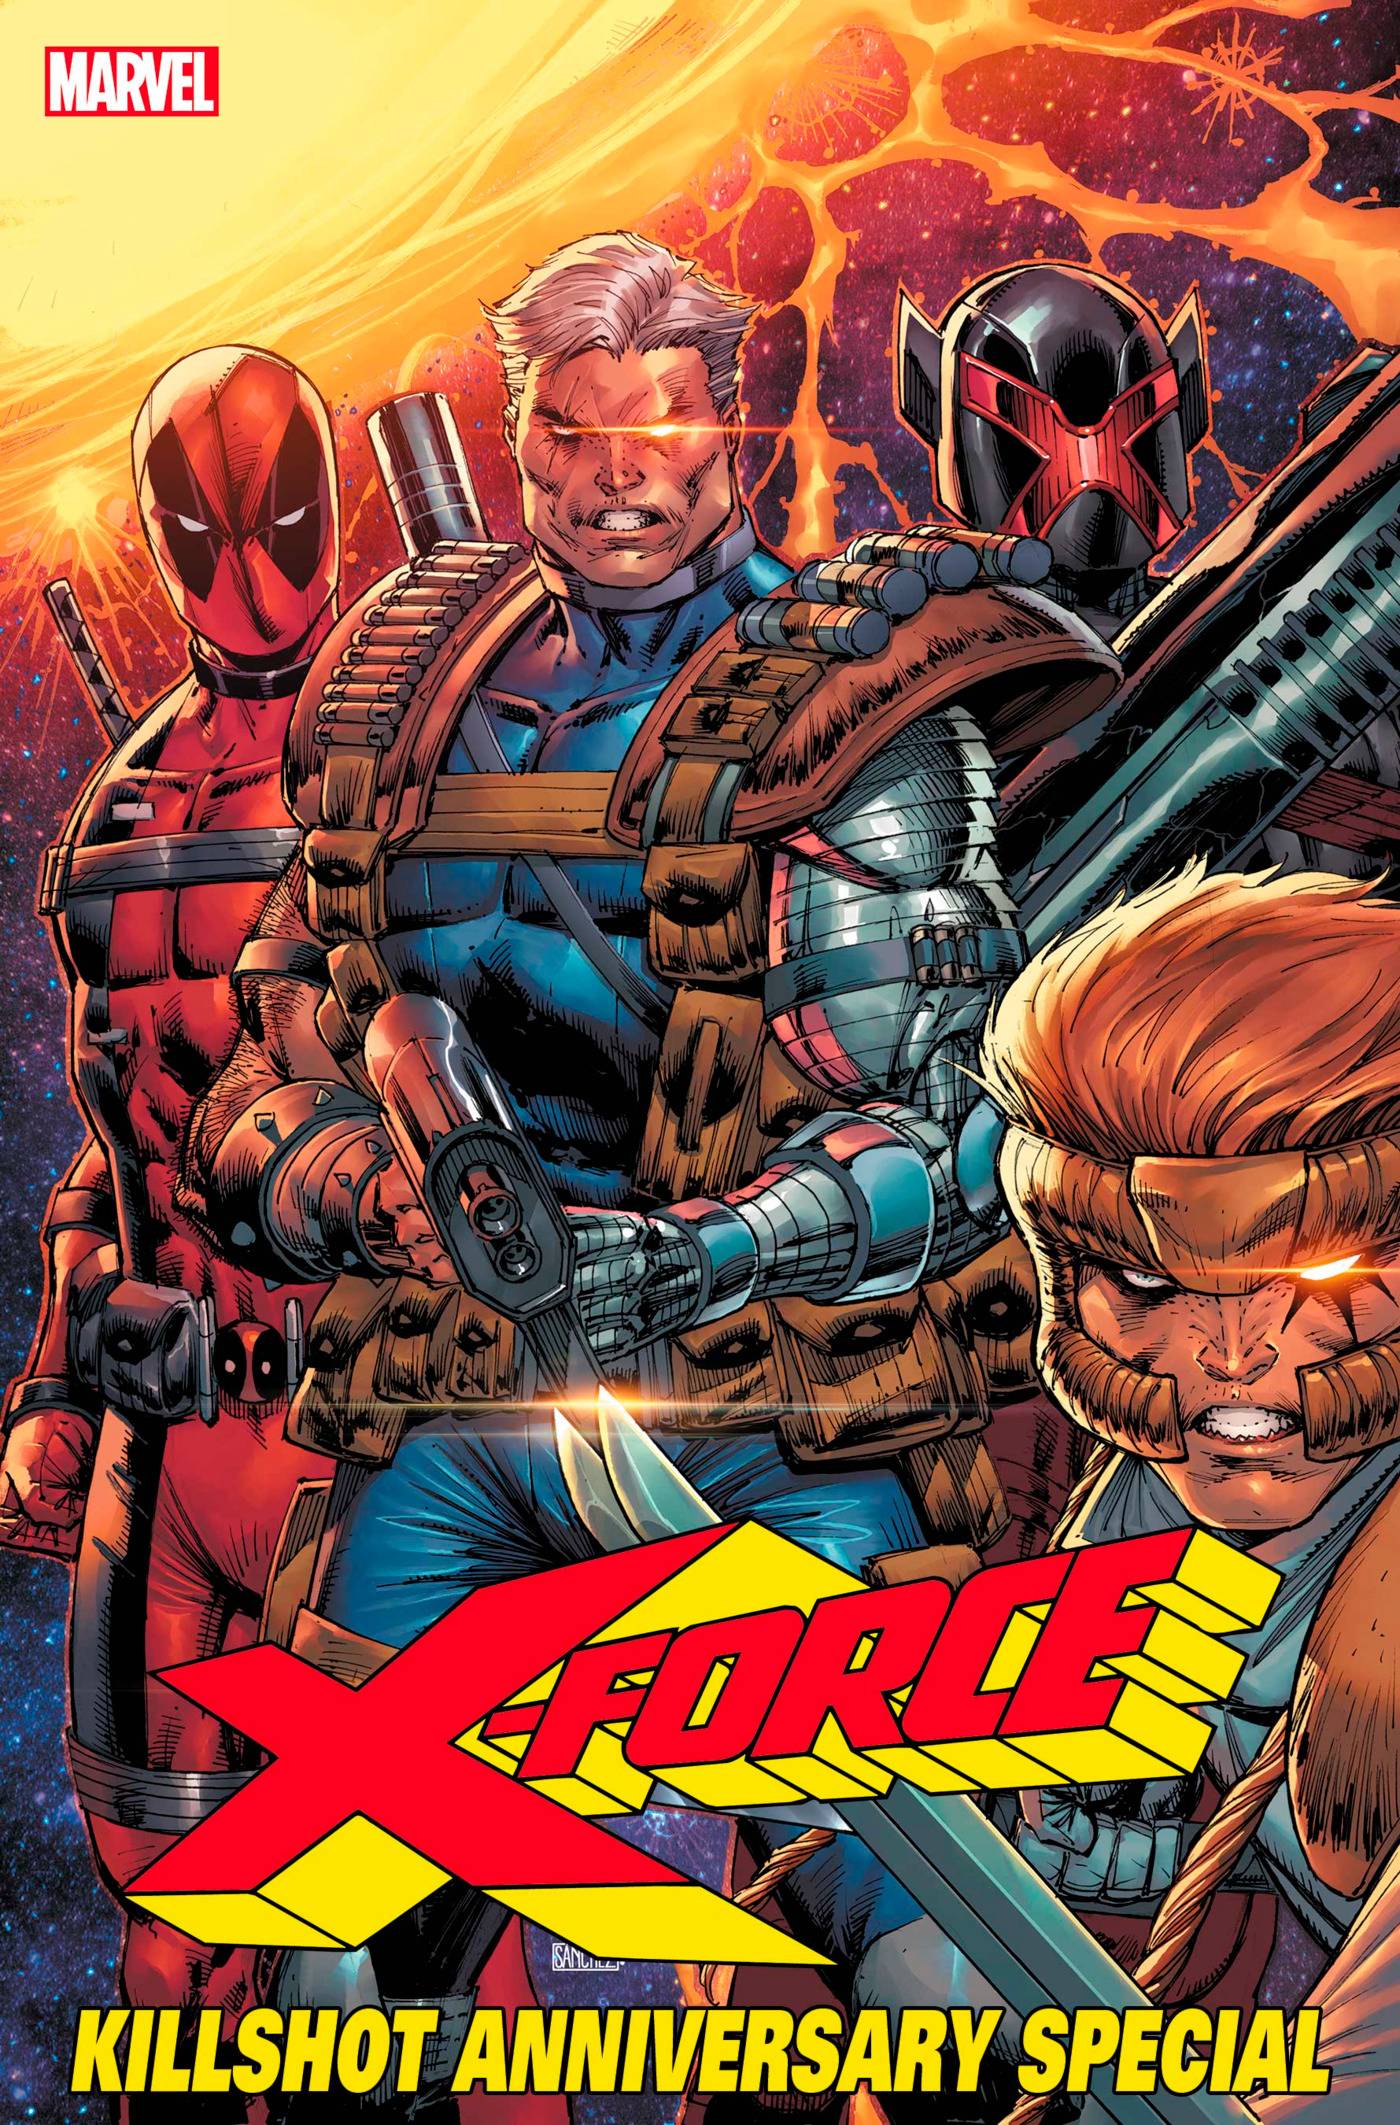 X-FORCE KILLSHOT ANNV SPECIAL #1